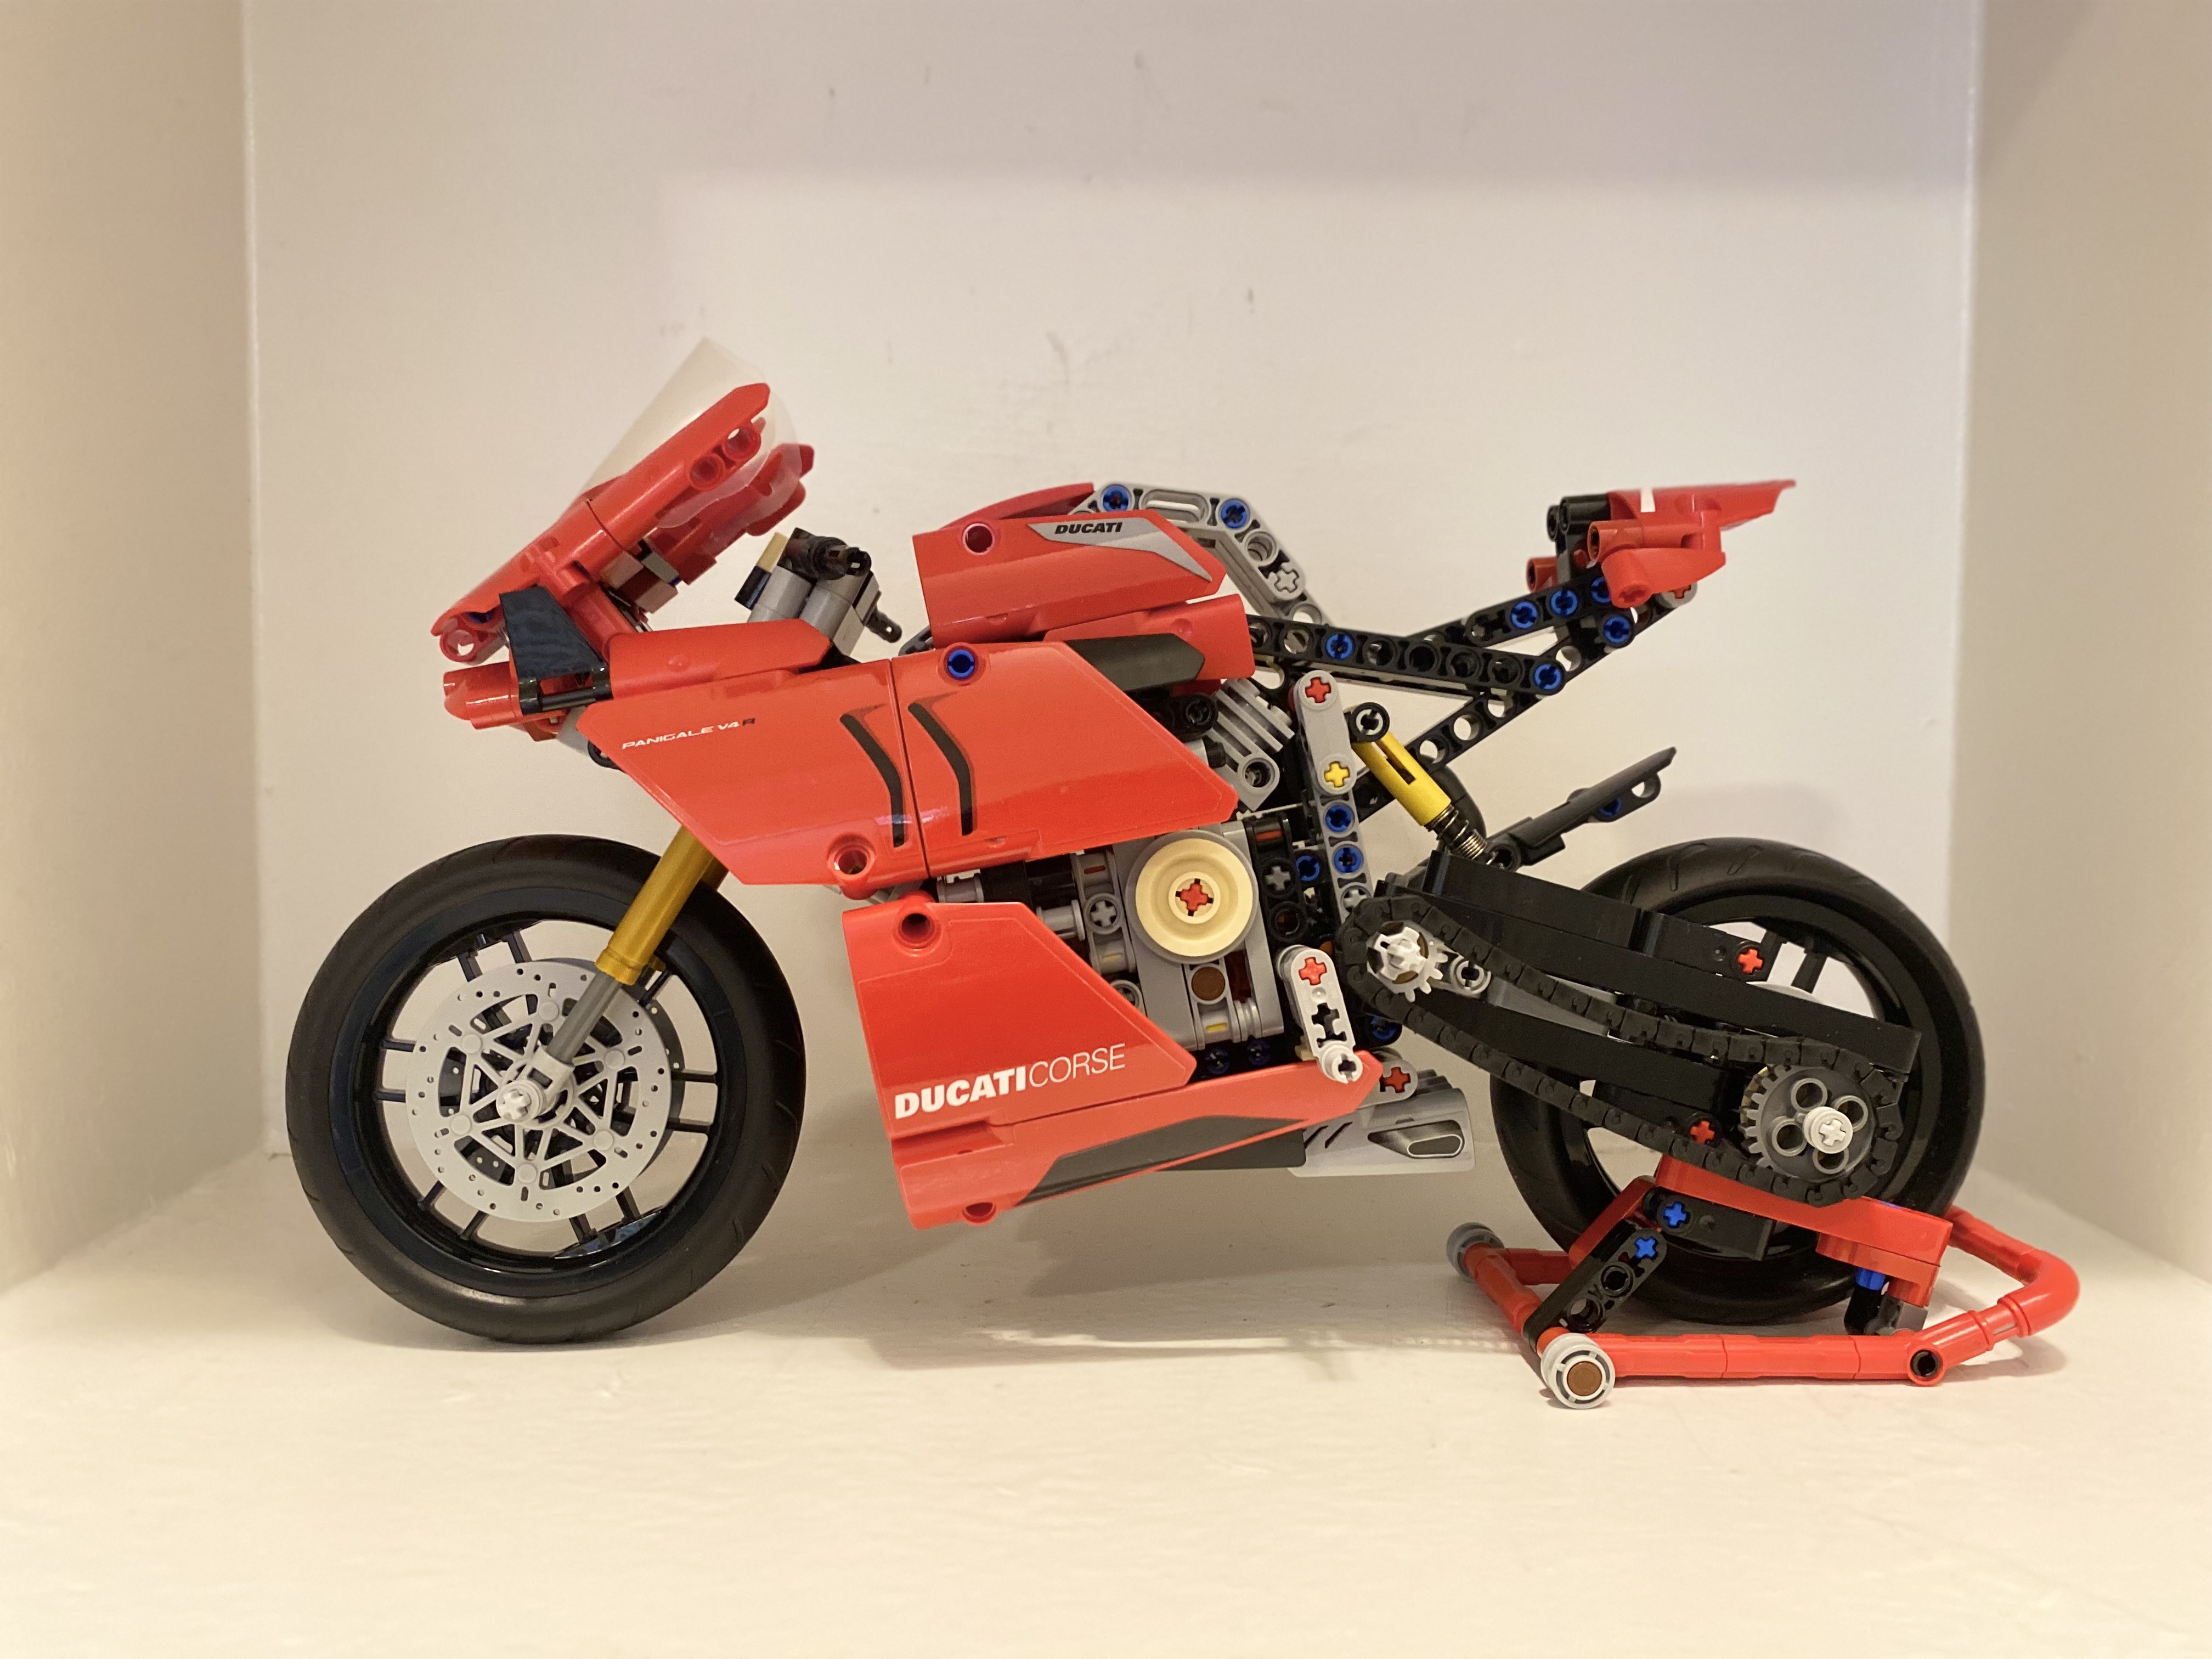 LEGO Technic Ducati